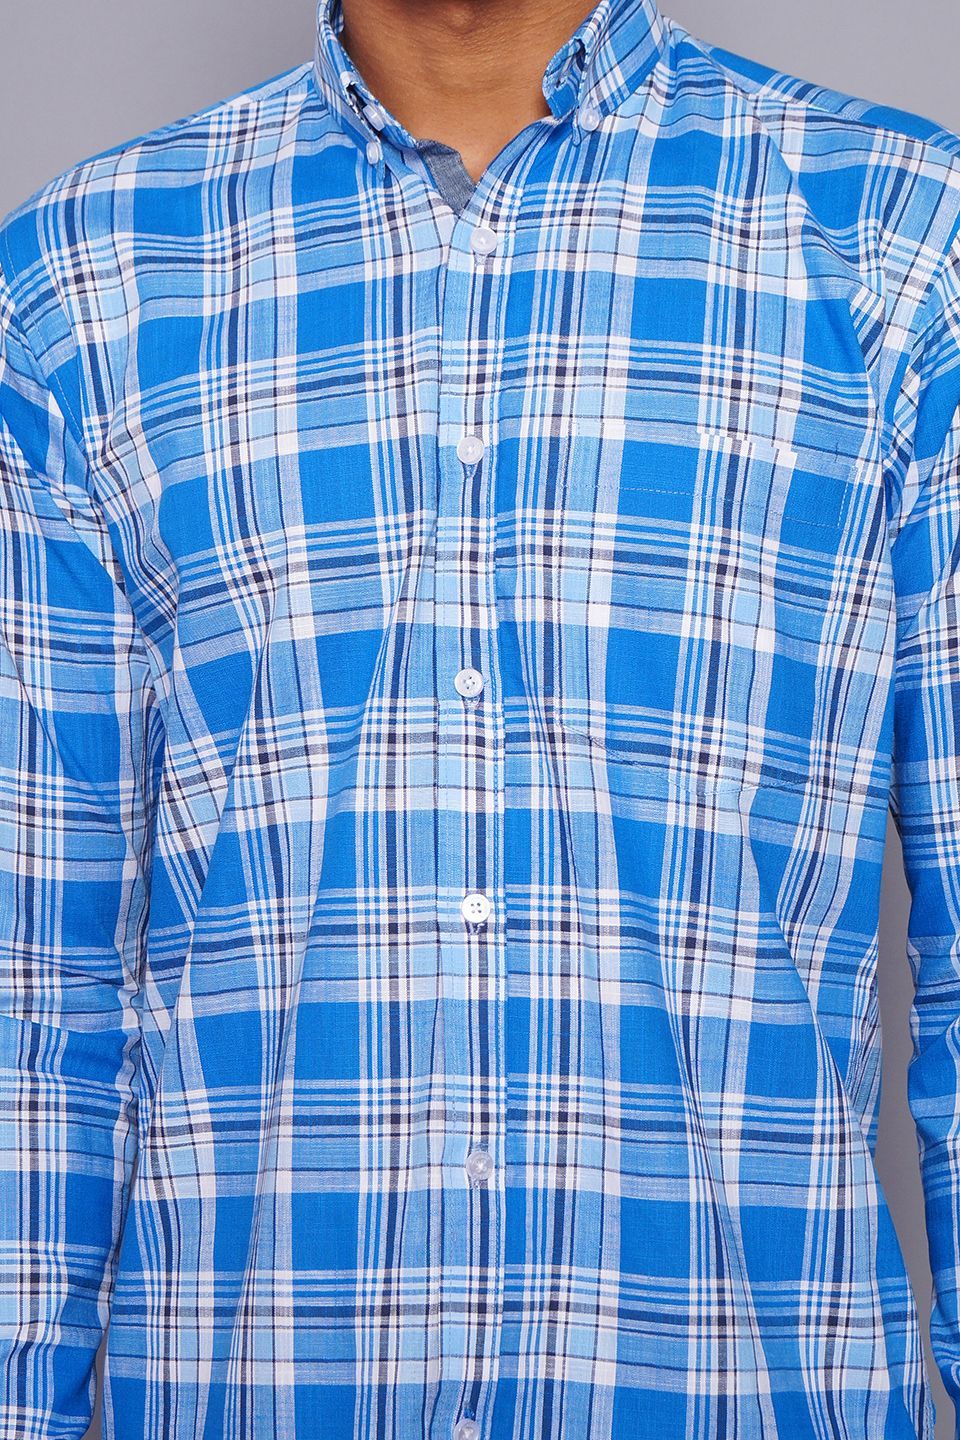 100% Premium Cotton Blue Check Shirt